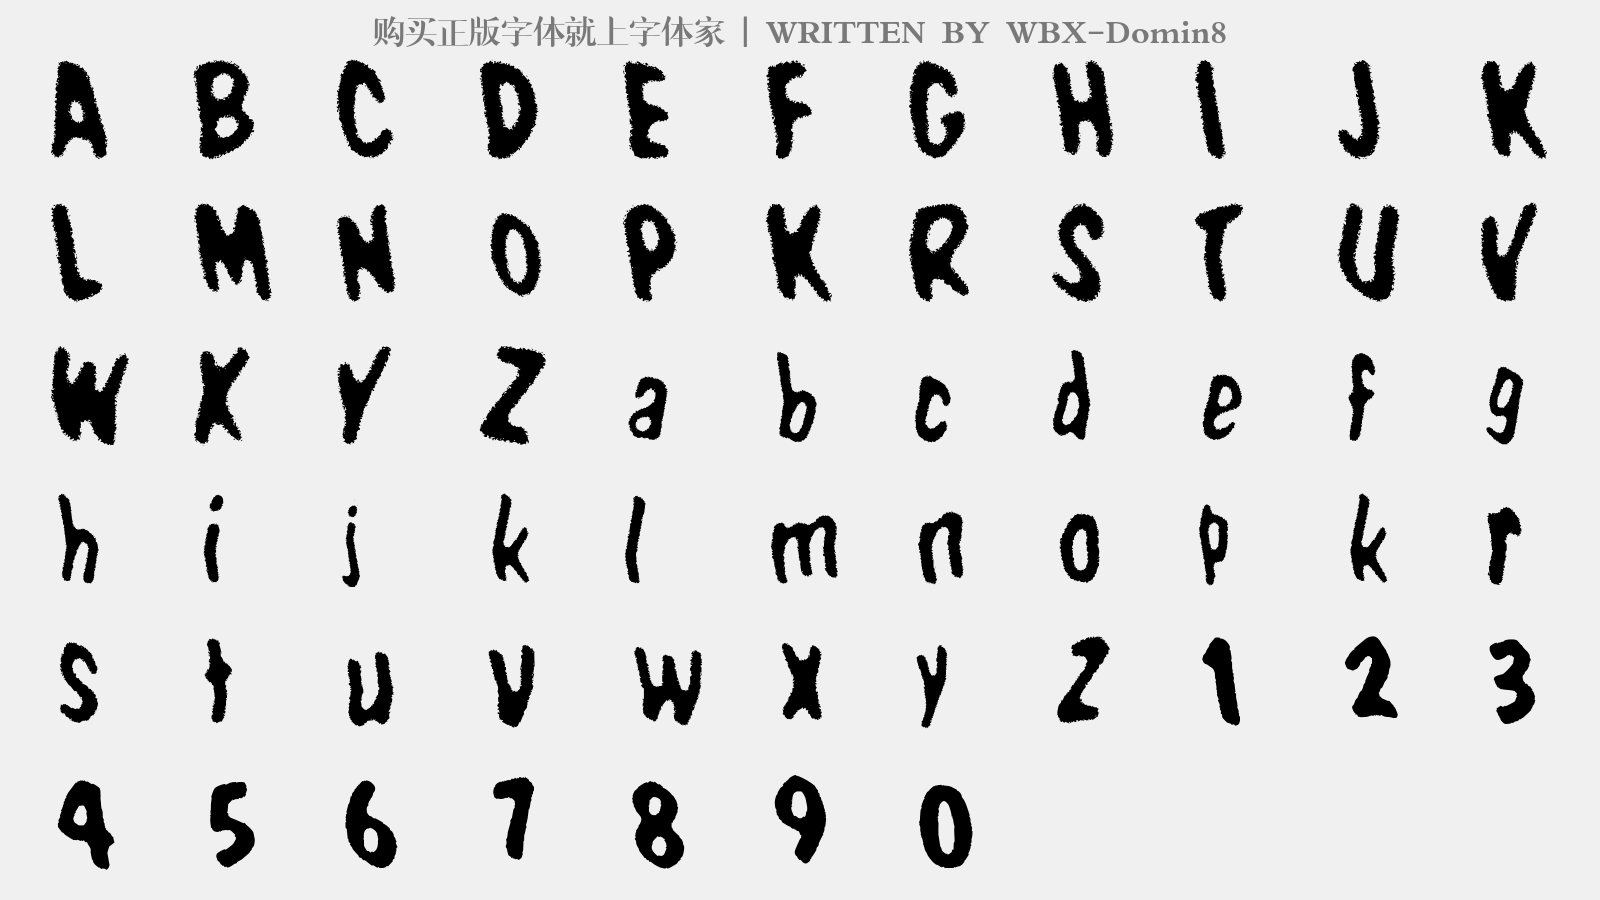 WBX-Domin8 - 大写字母/小写字母/数字